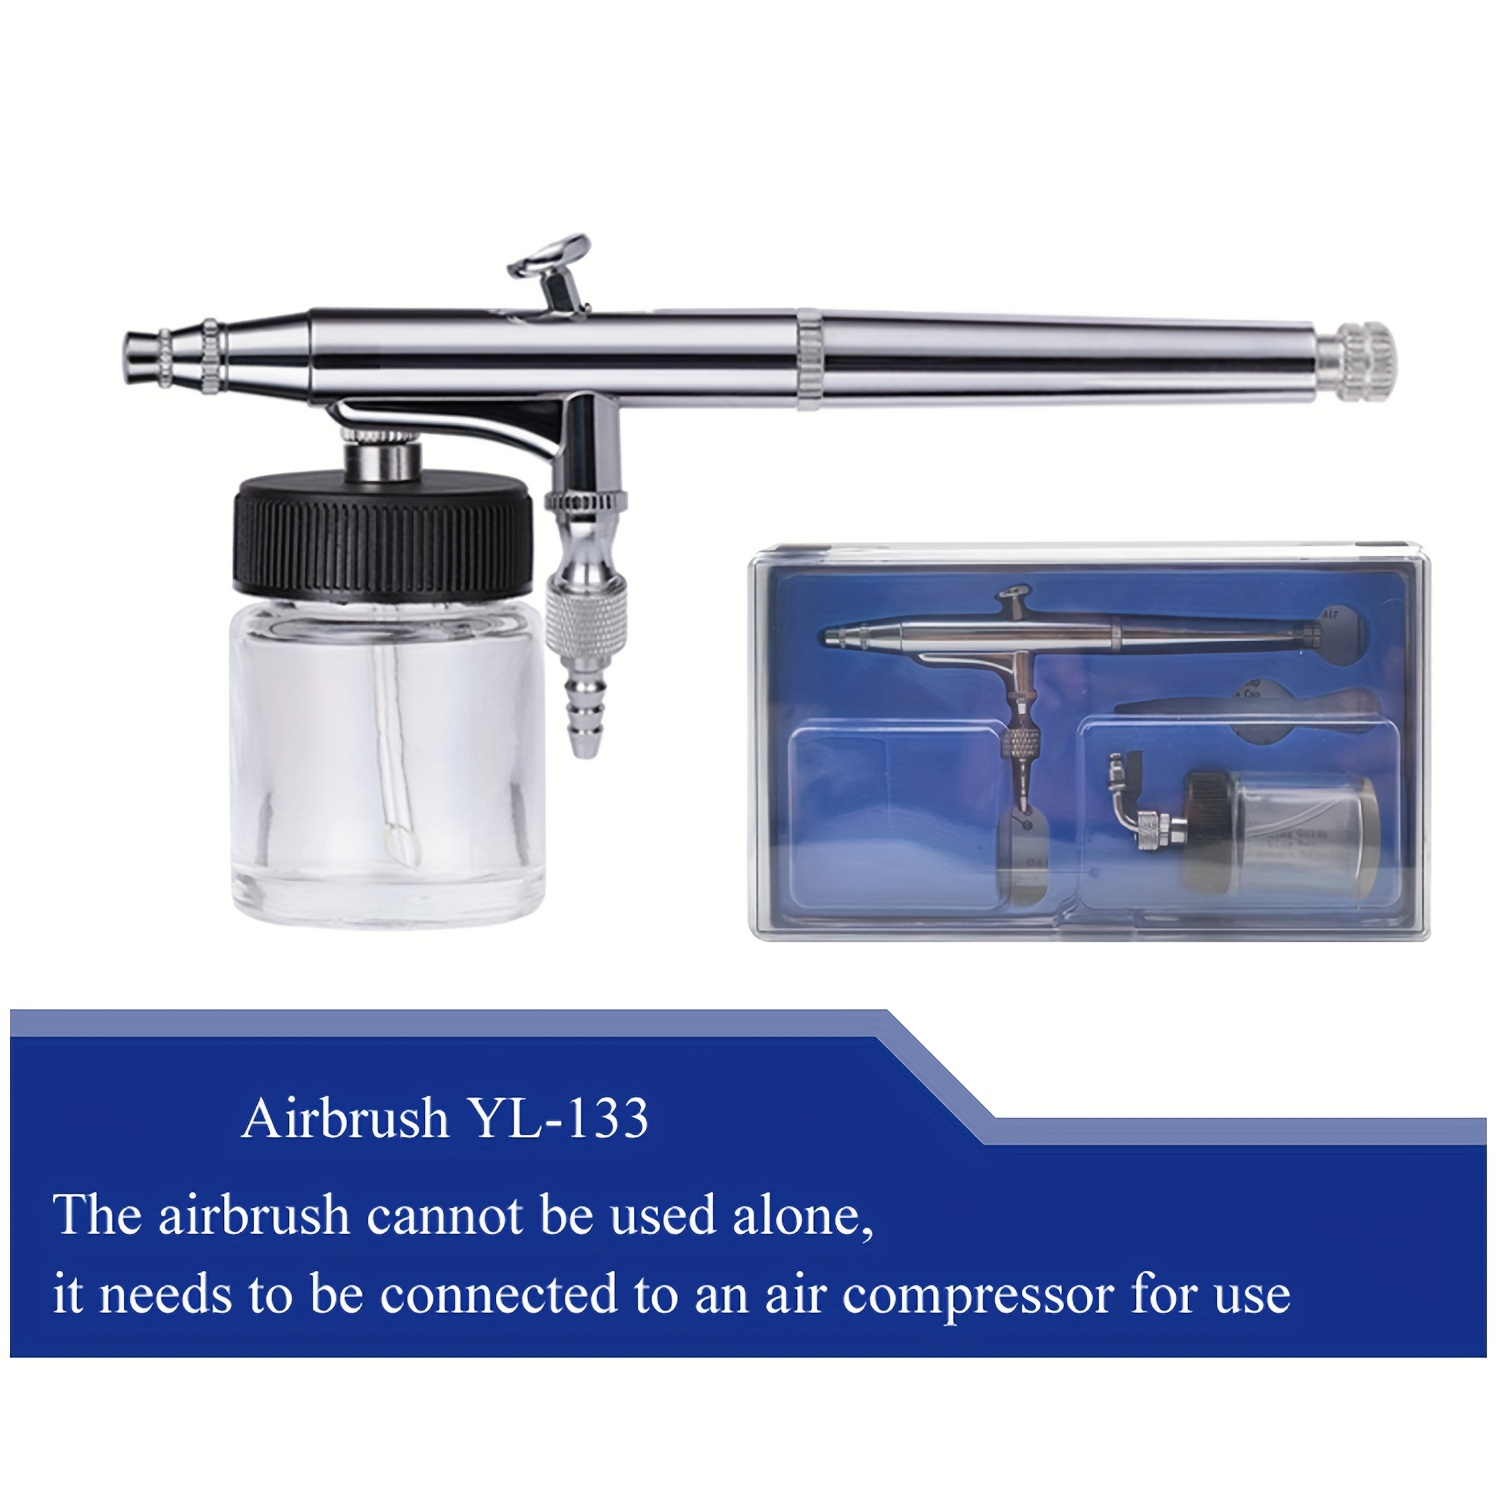 Multi-functional Airbrush Kit with Compressor Handheld Air Brush